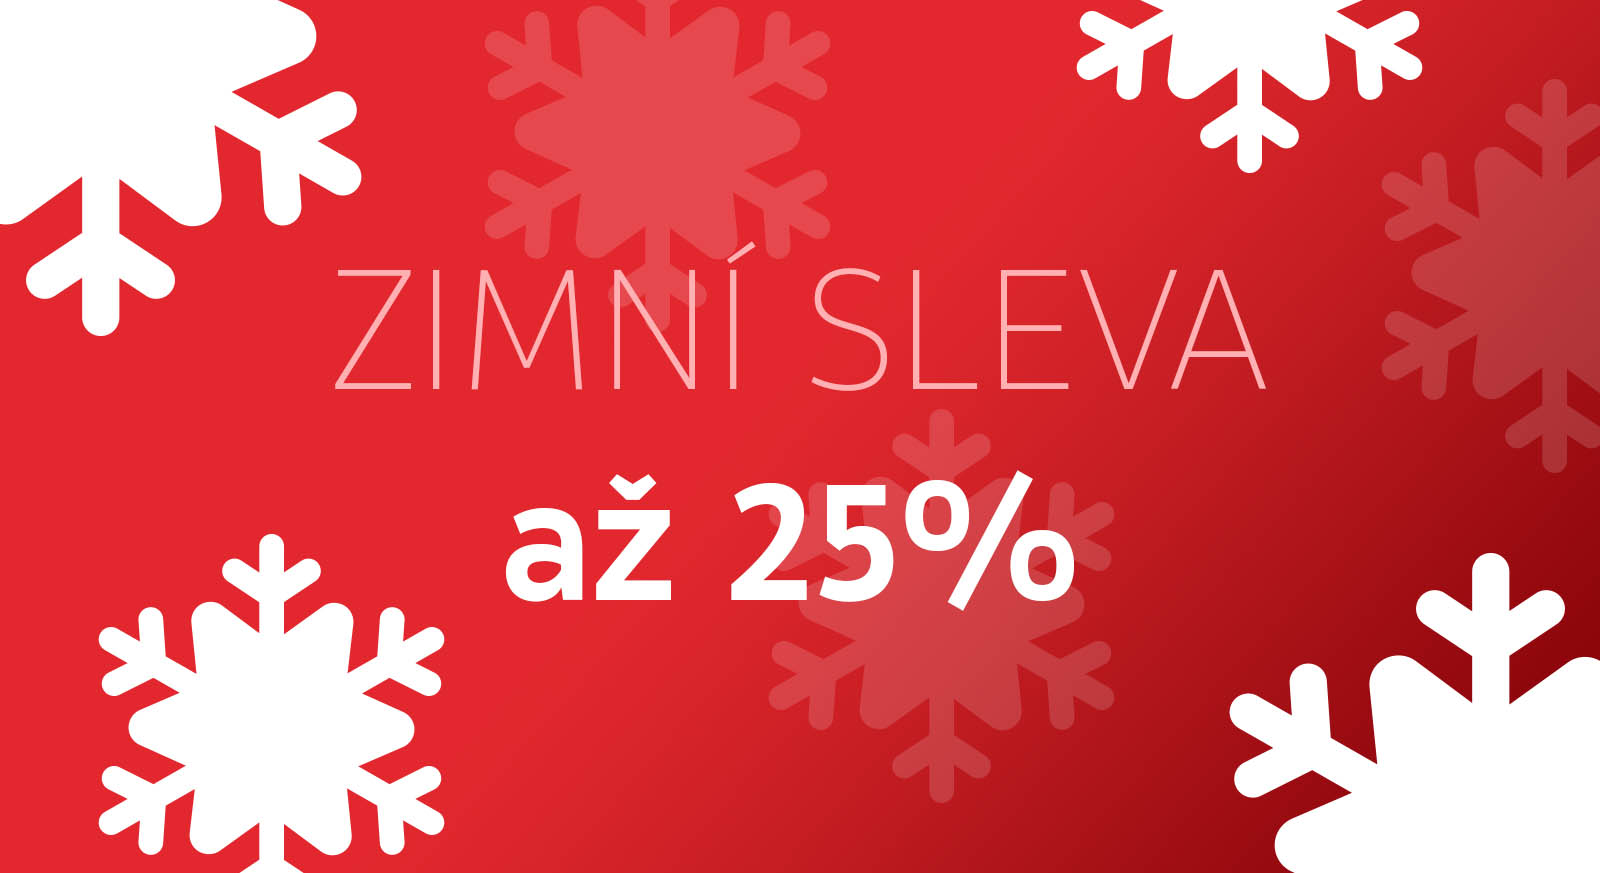 zimni-sleva-2021-banner